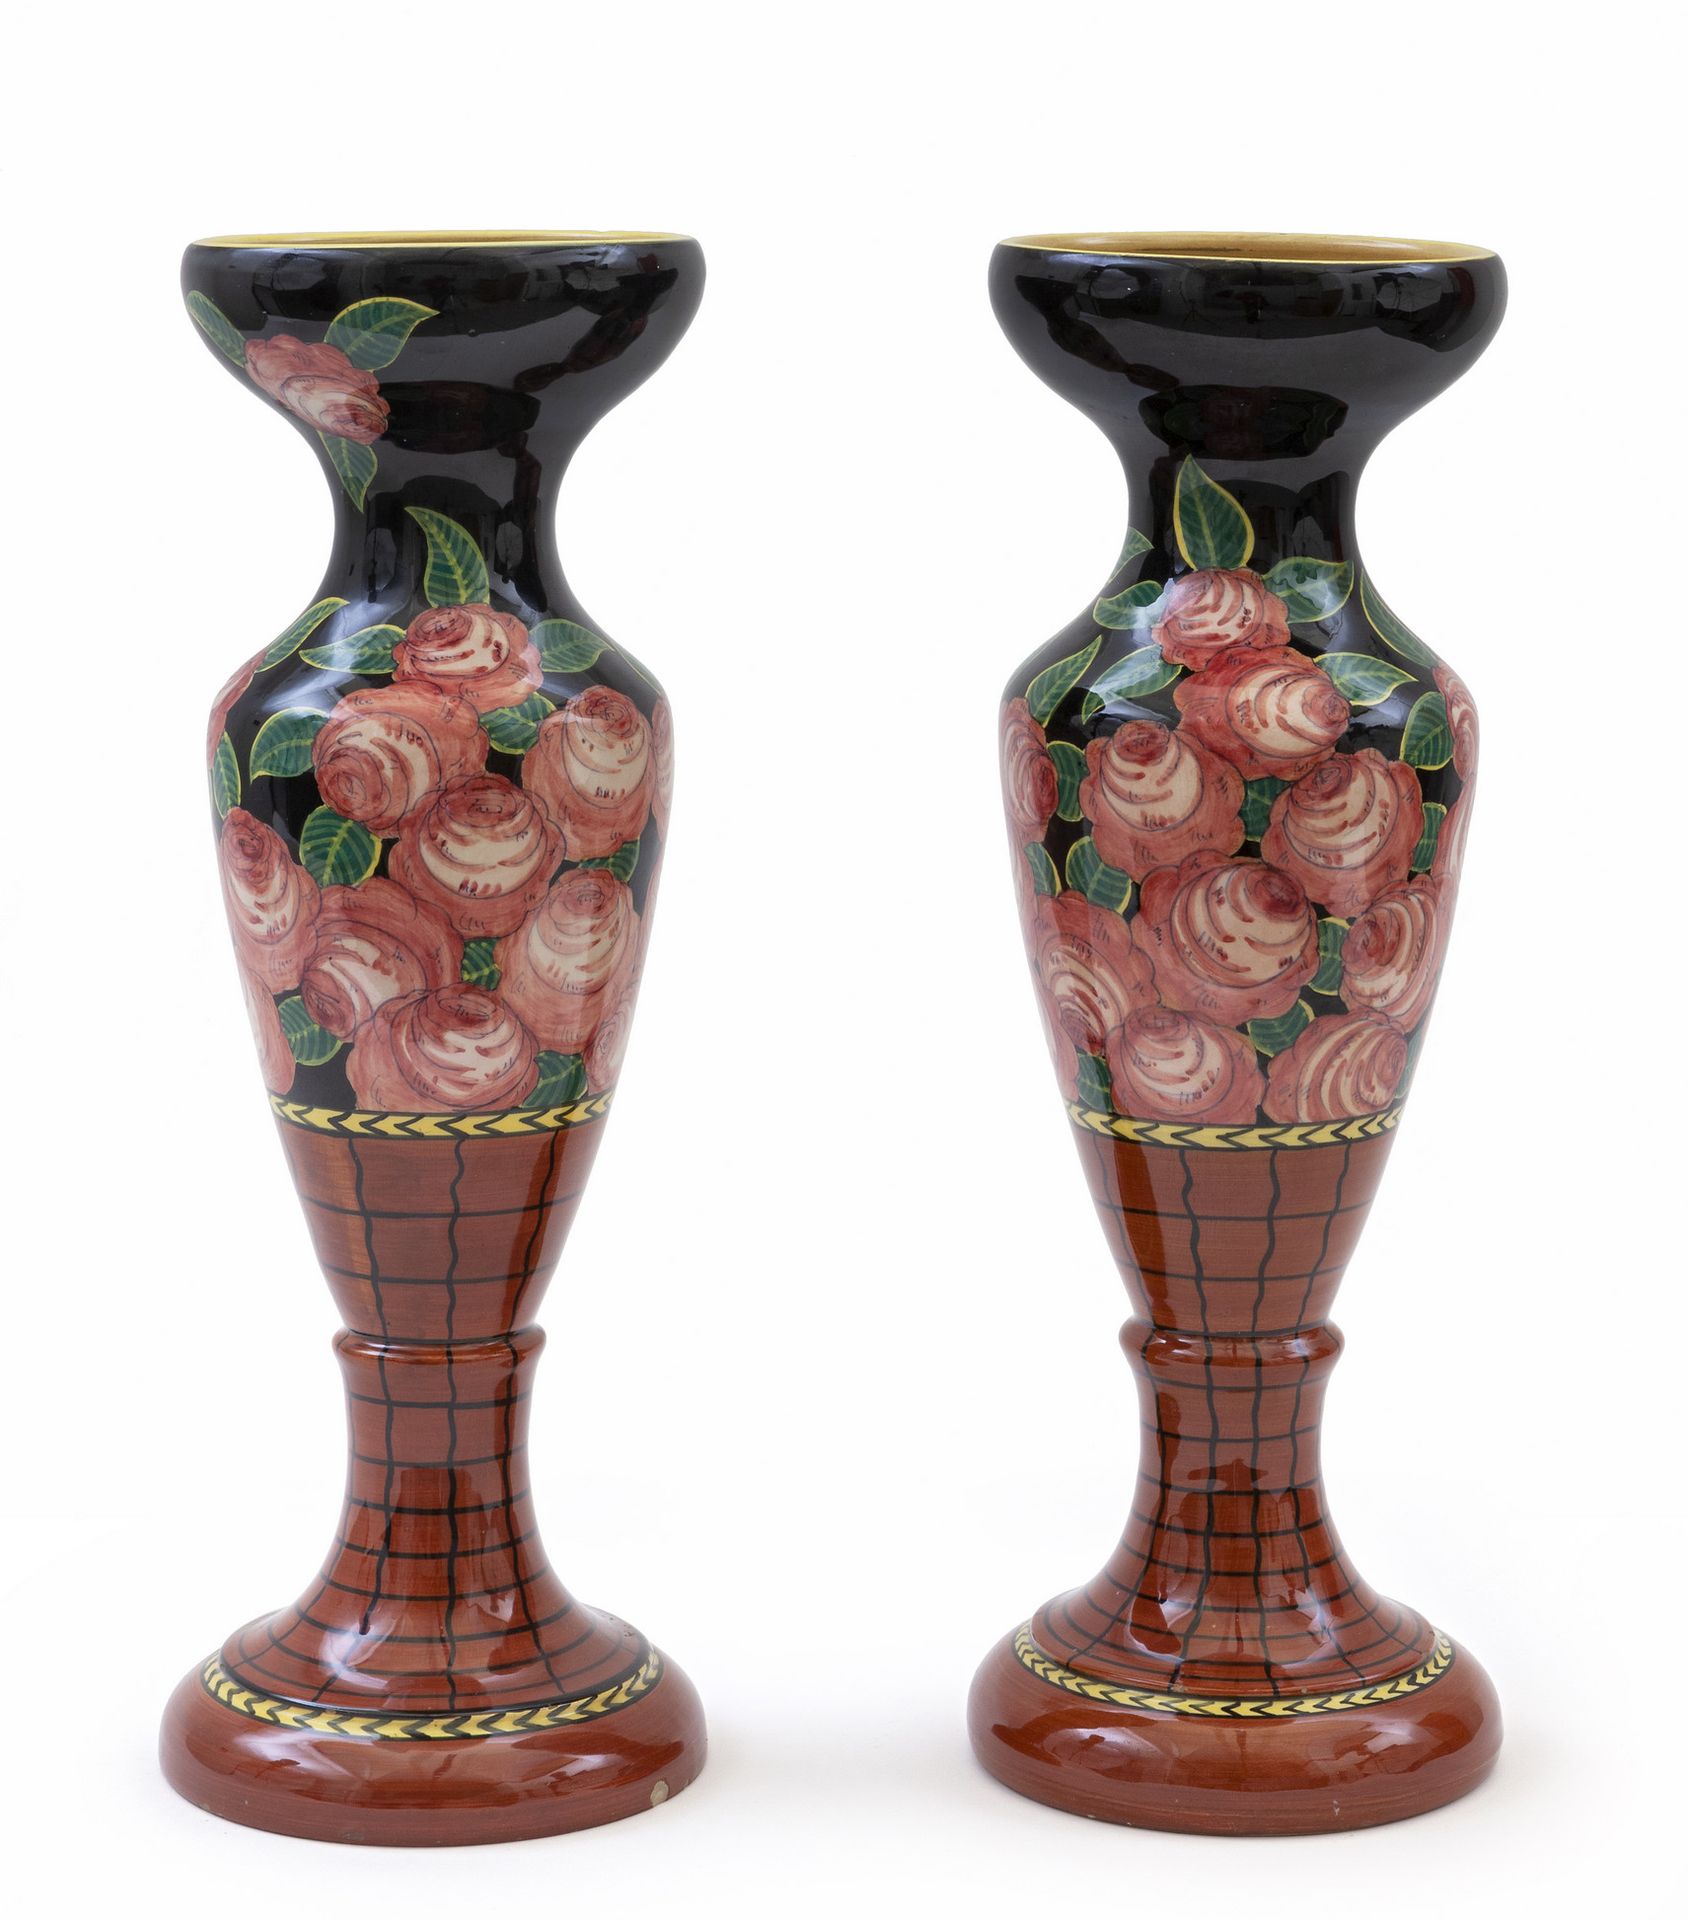 FENICE ALBISOLA FENICE Albisola
20世纪30年代的两个陶瓷花瓶。
车床成型，手工装饰。
标有 "Fenice Albisola &hellip;